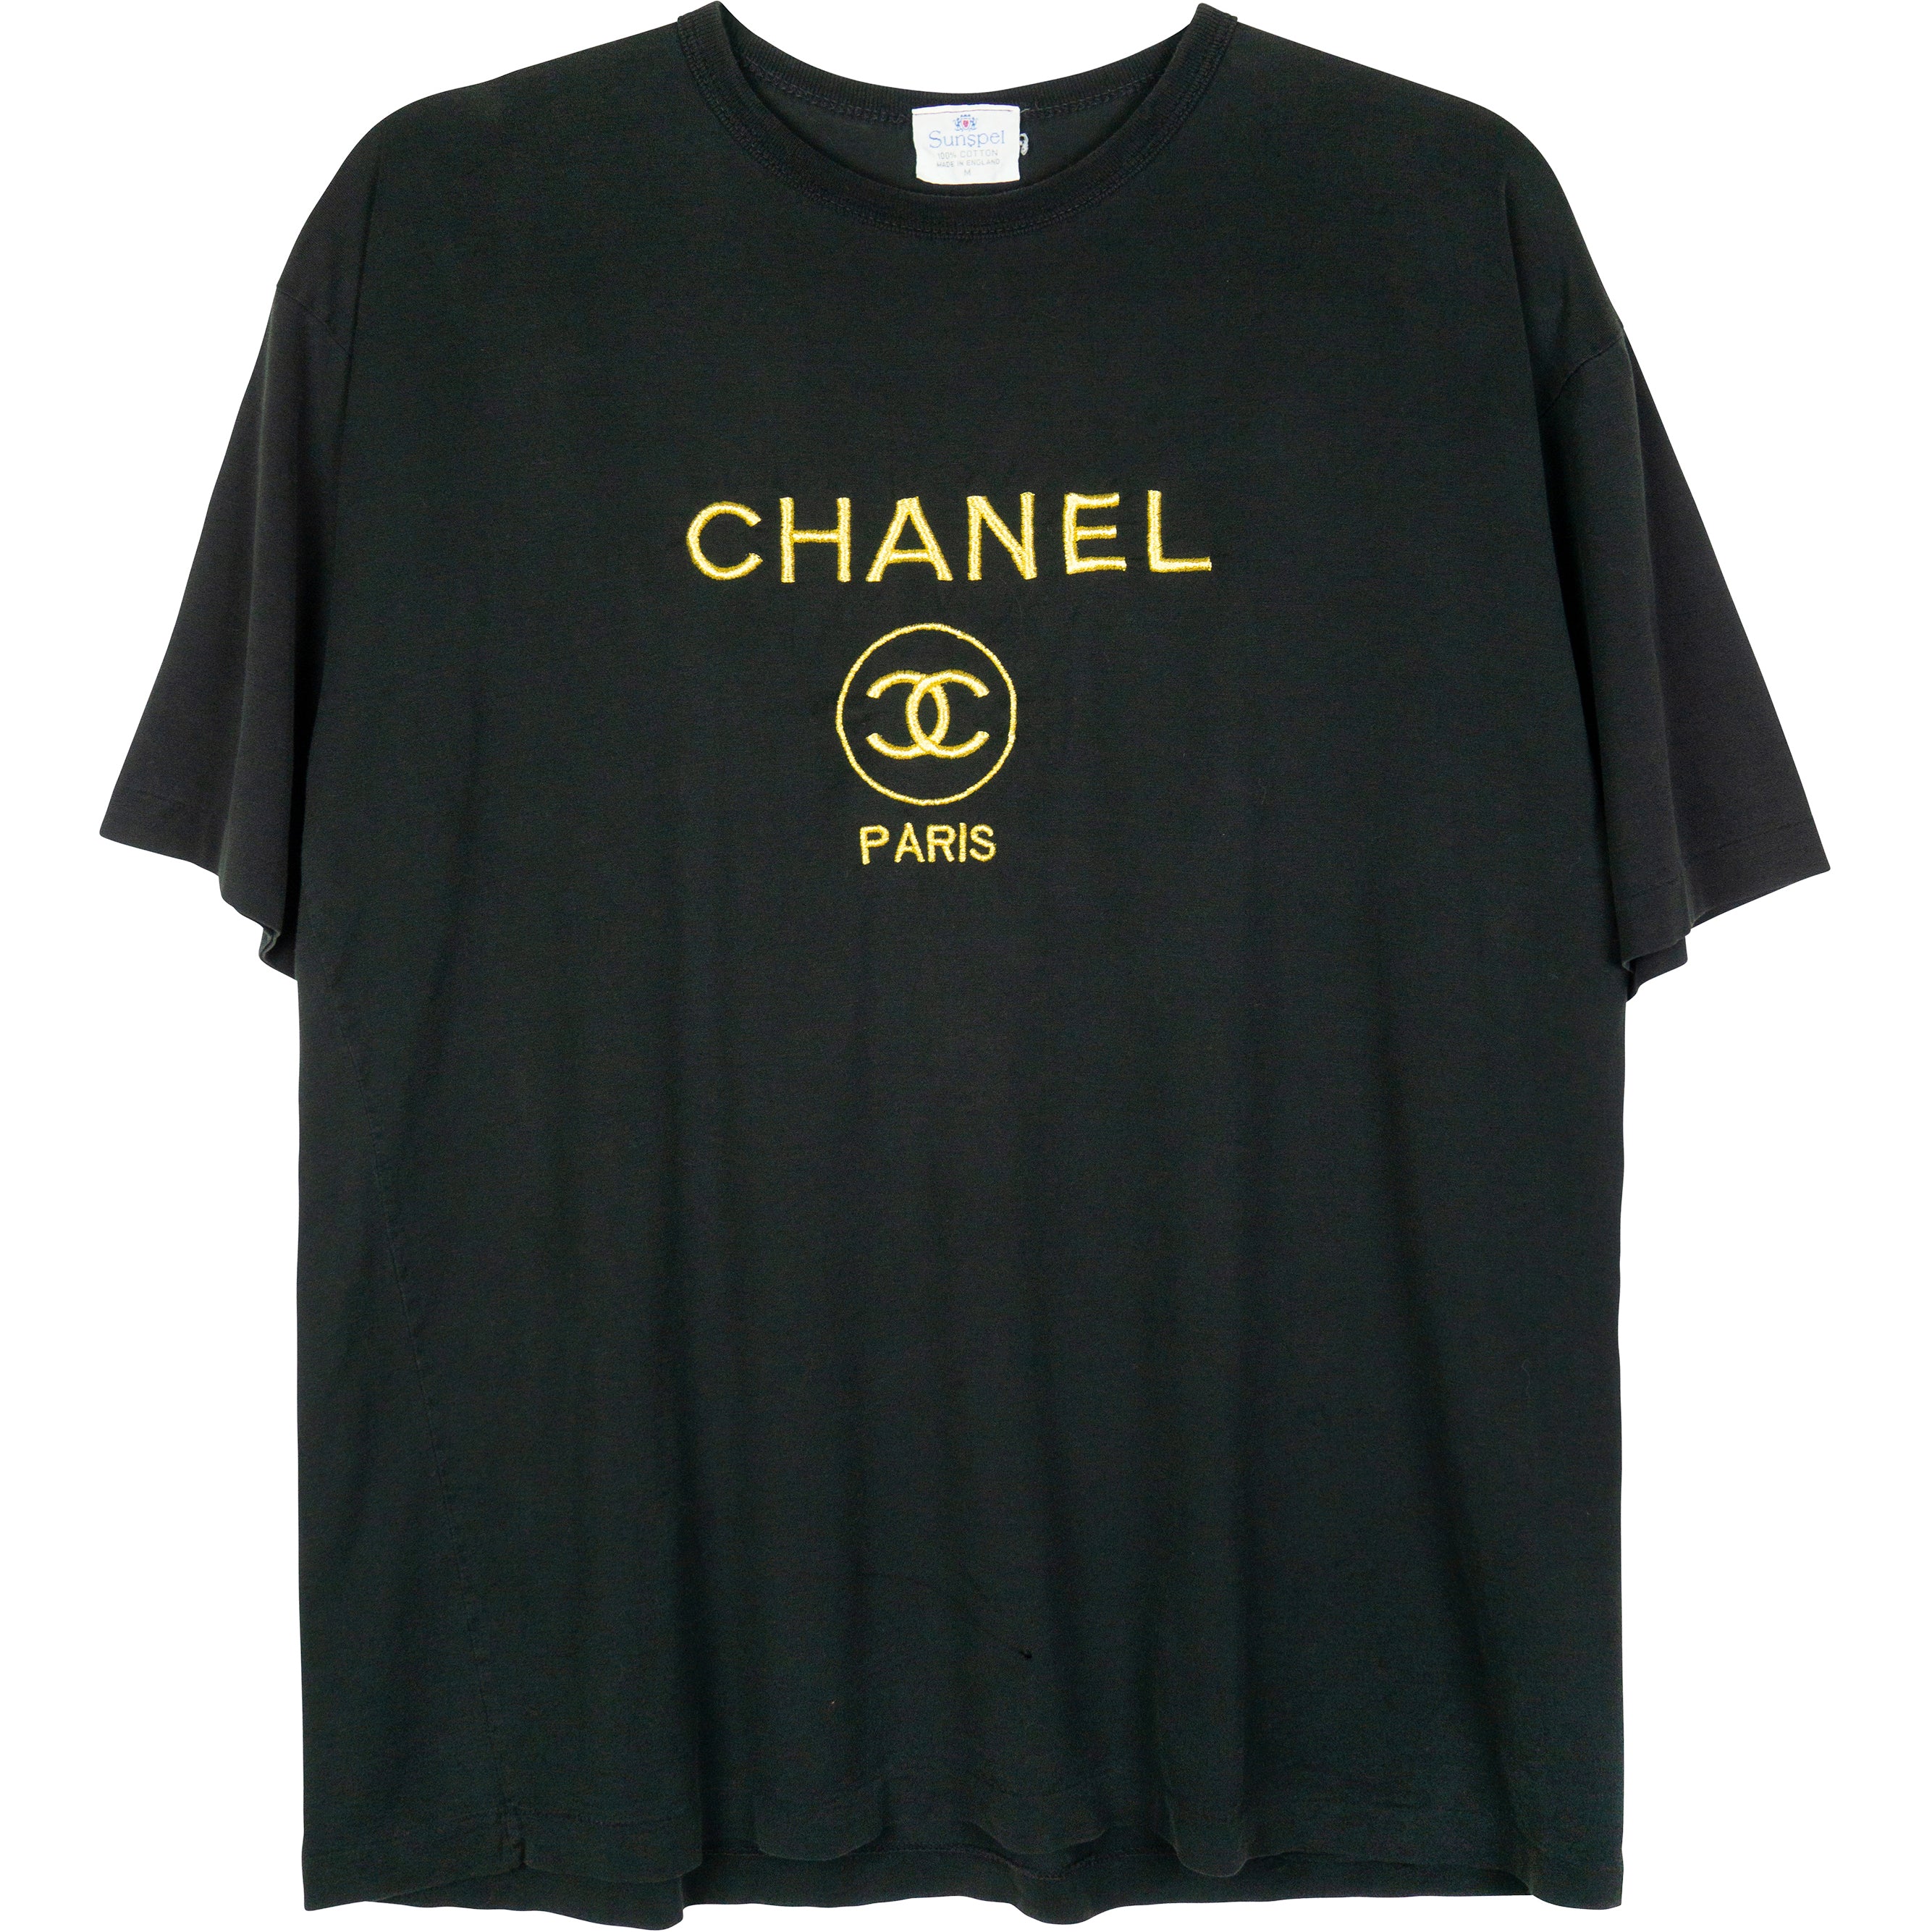 chanel tee shirts for women cc logo